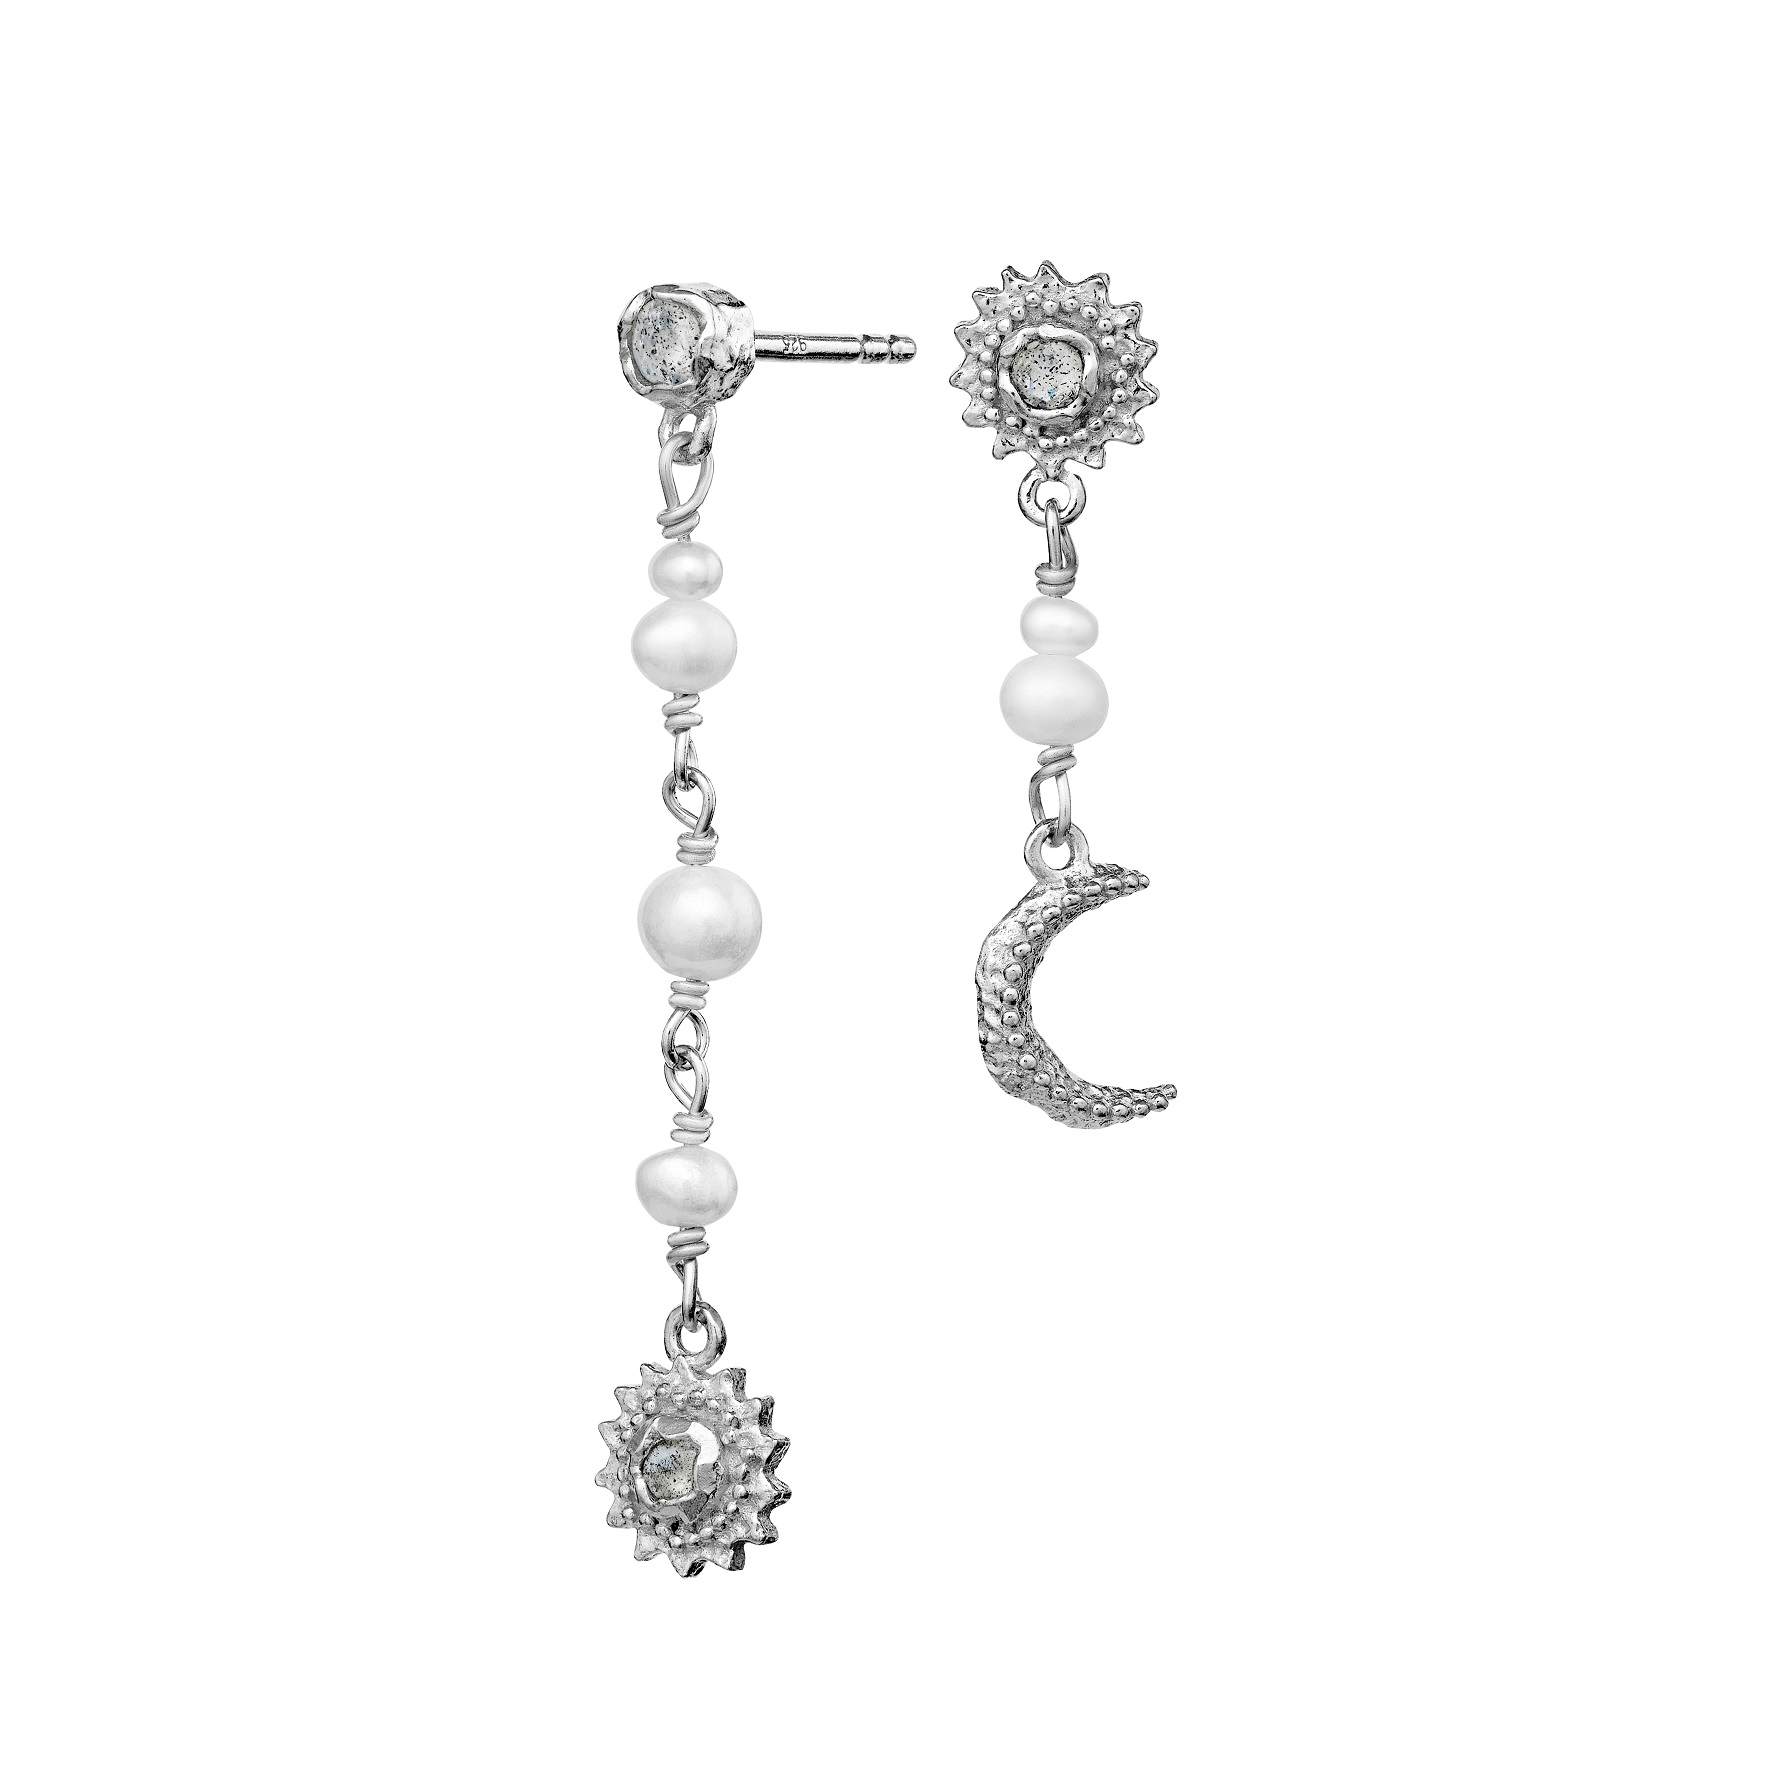 Sunniva Earrings von Maanesten in Silber Sterling 925